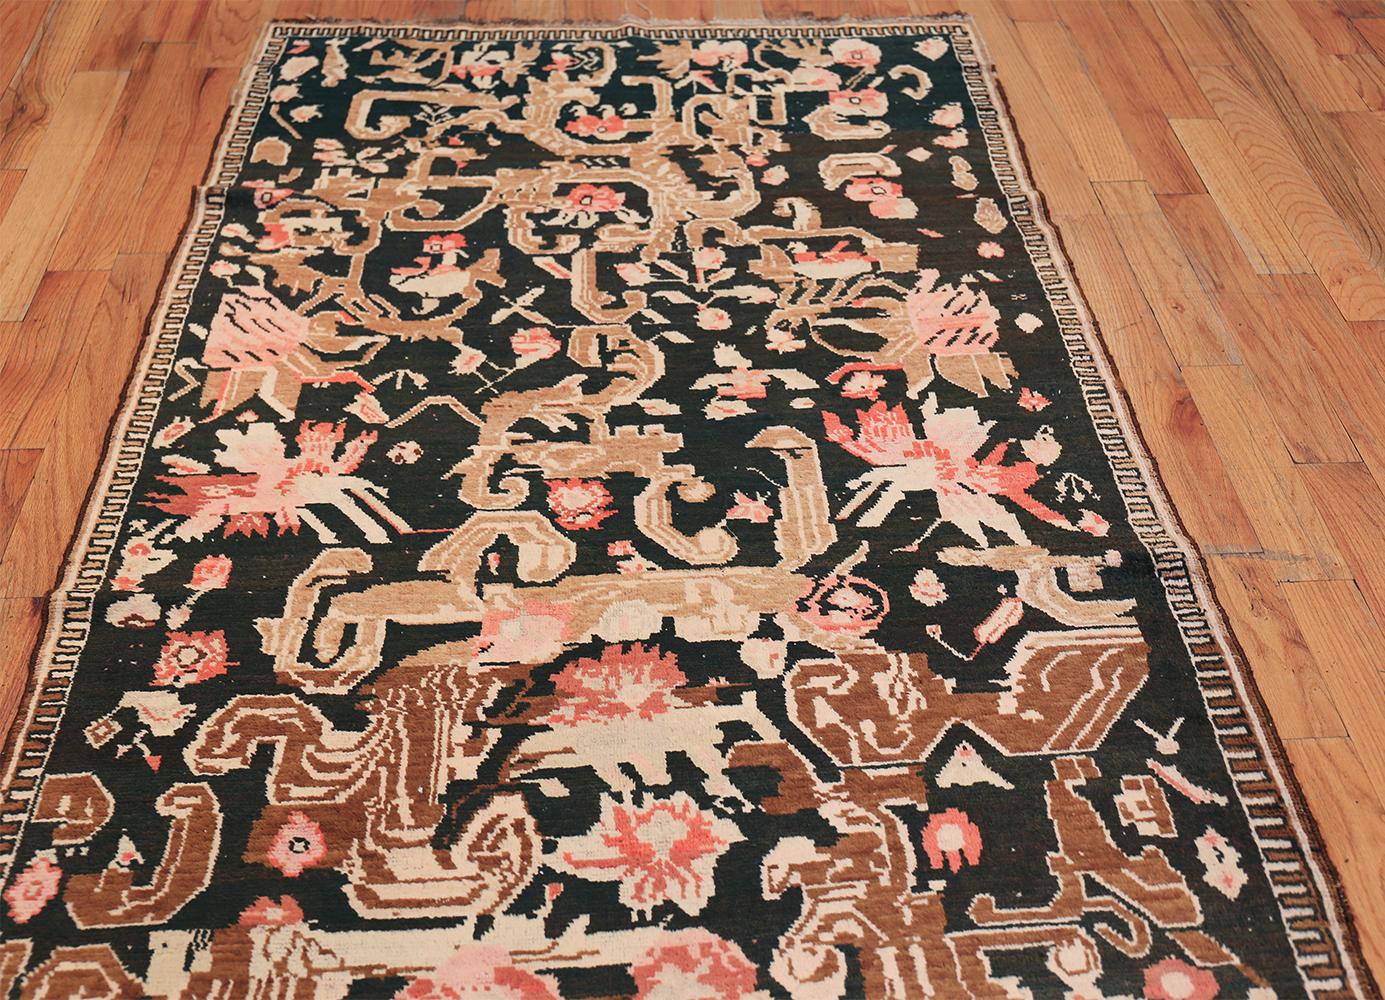 Wool Antique Caucasian Karabagh Rug. Size: 4 ft x 14 ft 7 in (1.22 m x 4.44 m)